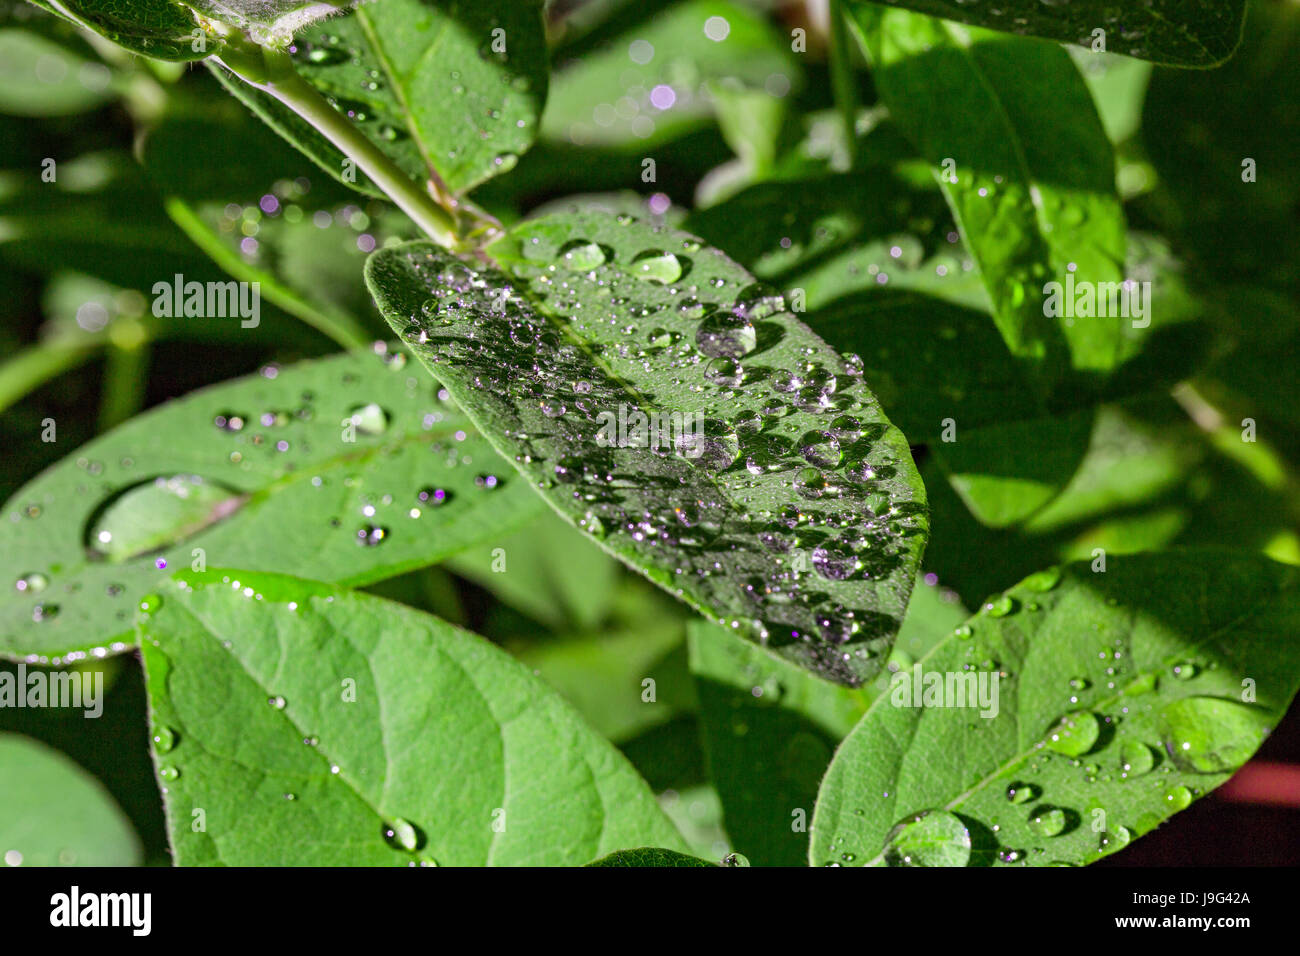 Kamtschatka-Heckenkirsche, Lonicera caerulea, Lonicera kamtschatica, Green leaves with fresh and clean morning water drops. Gardening as a hobby. Stock Photo